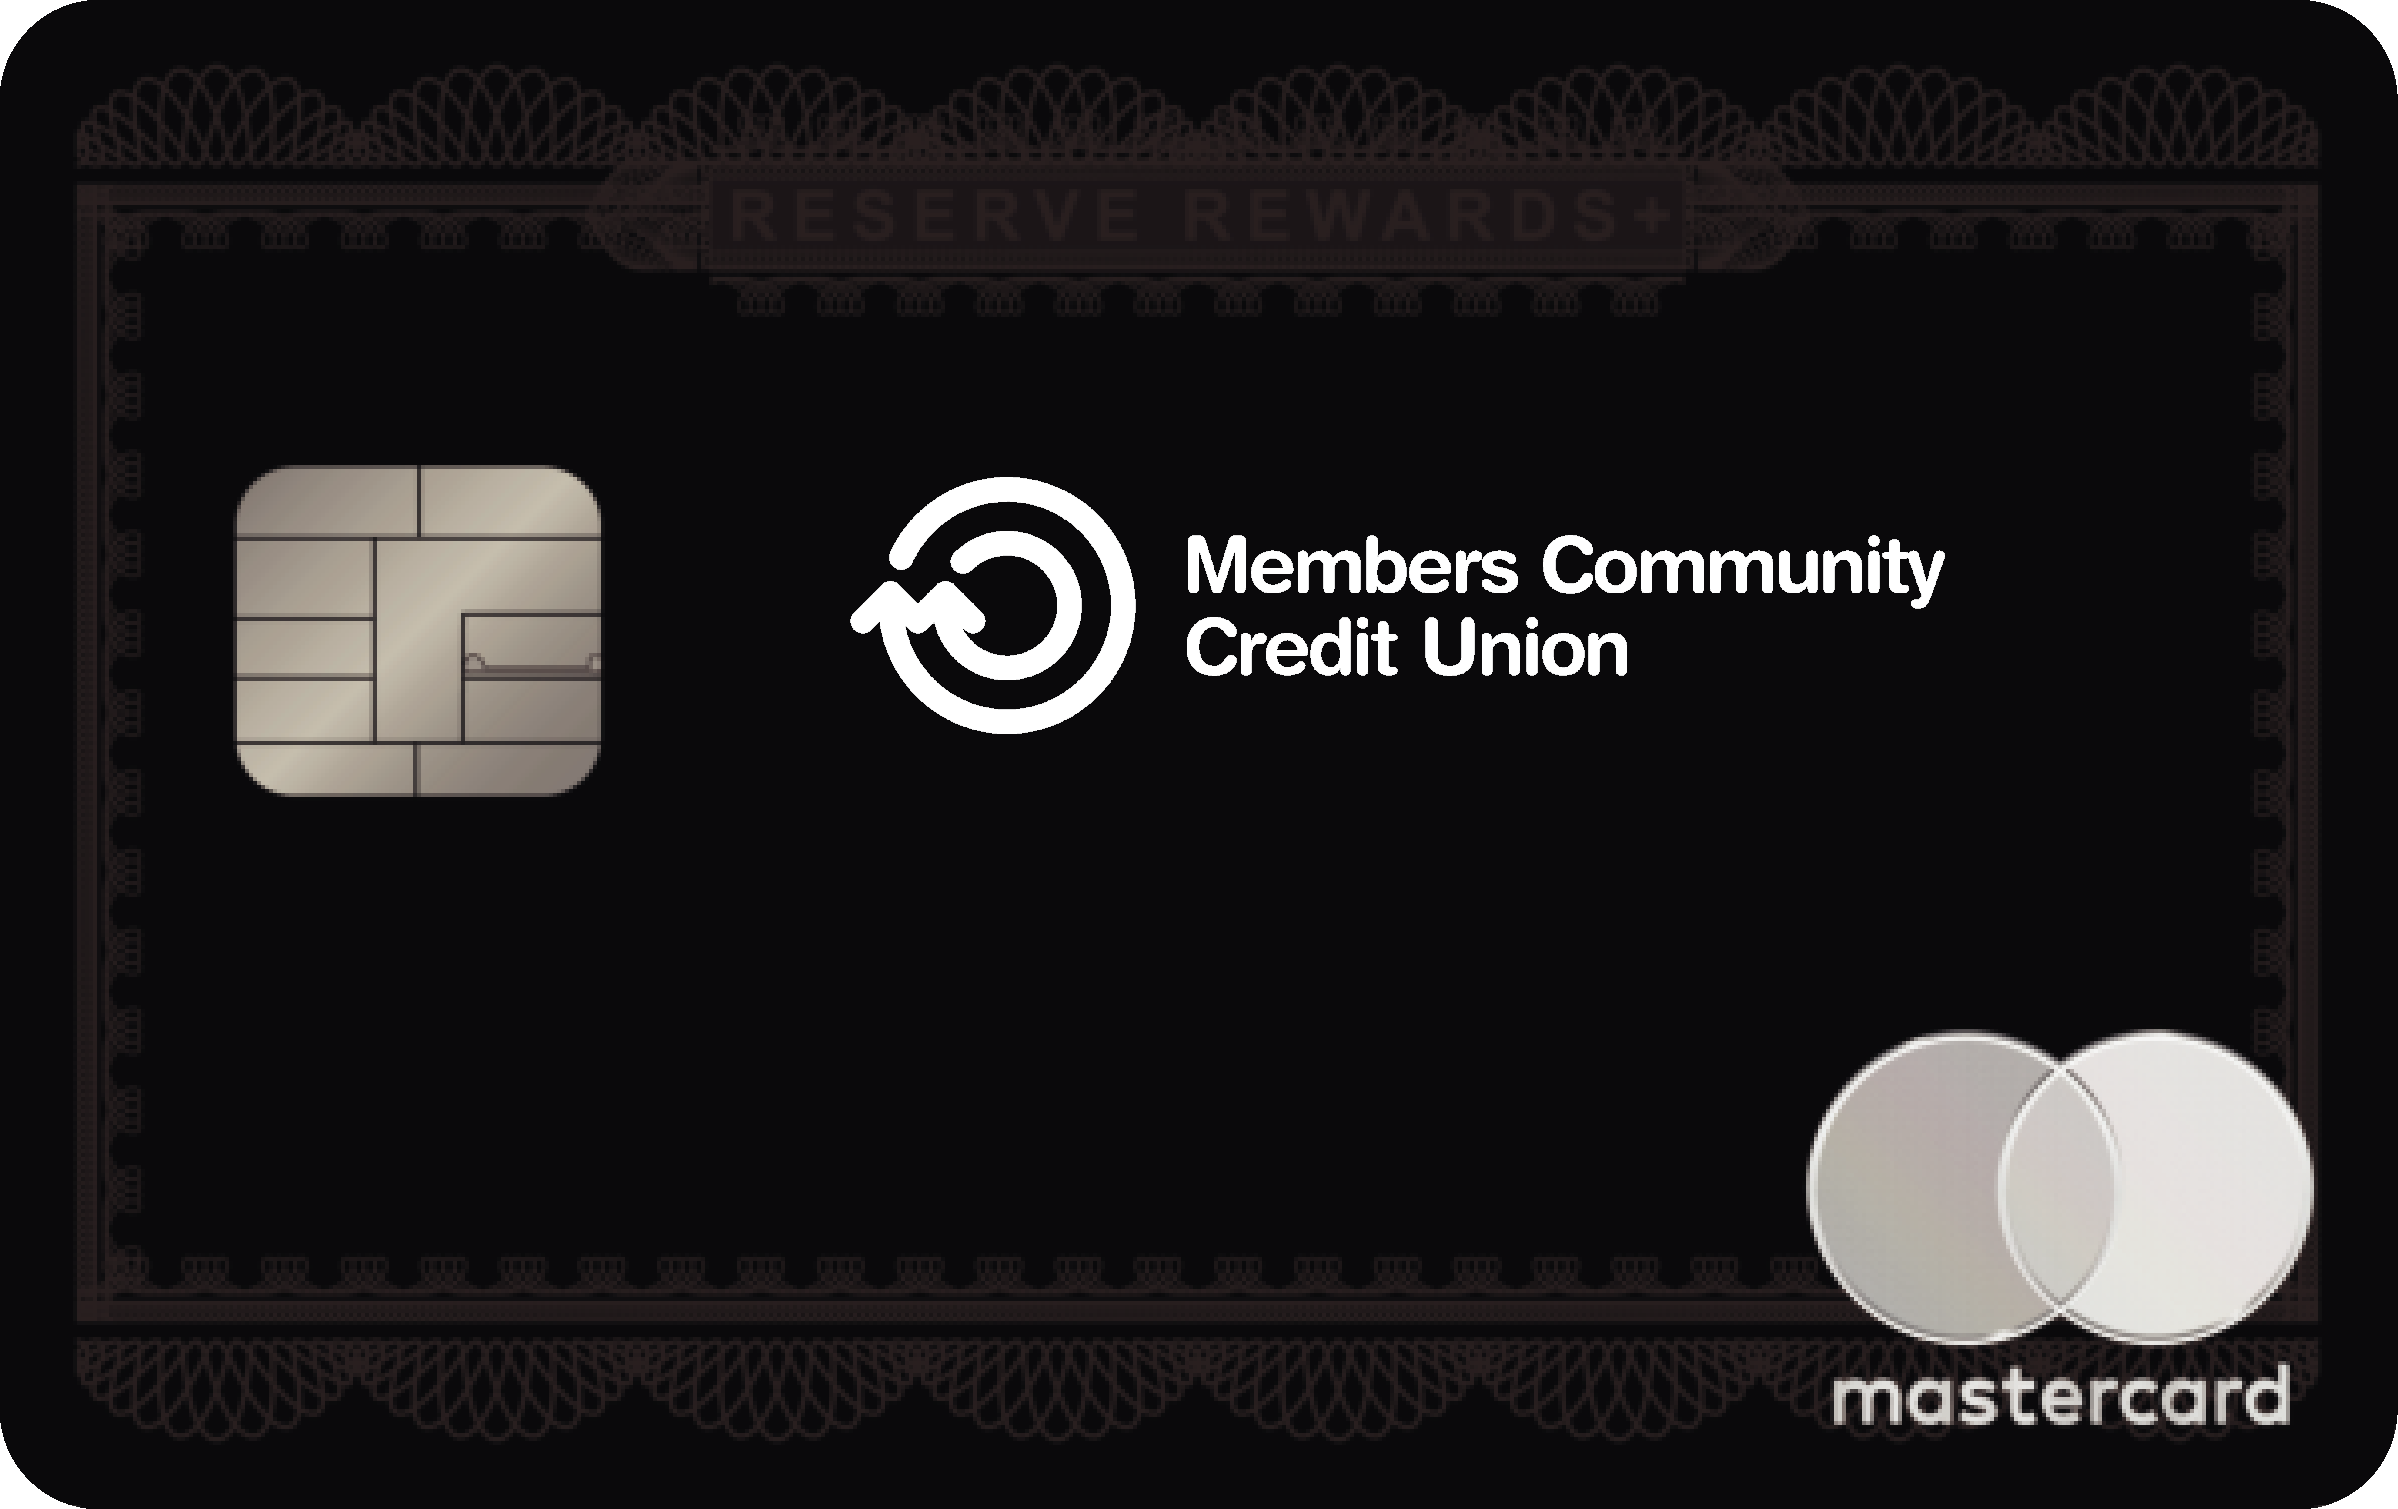 Members Community Credit Union